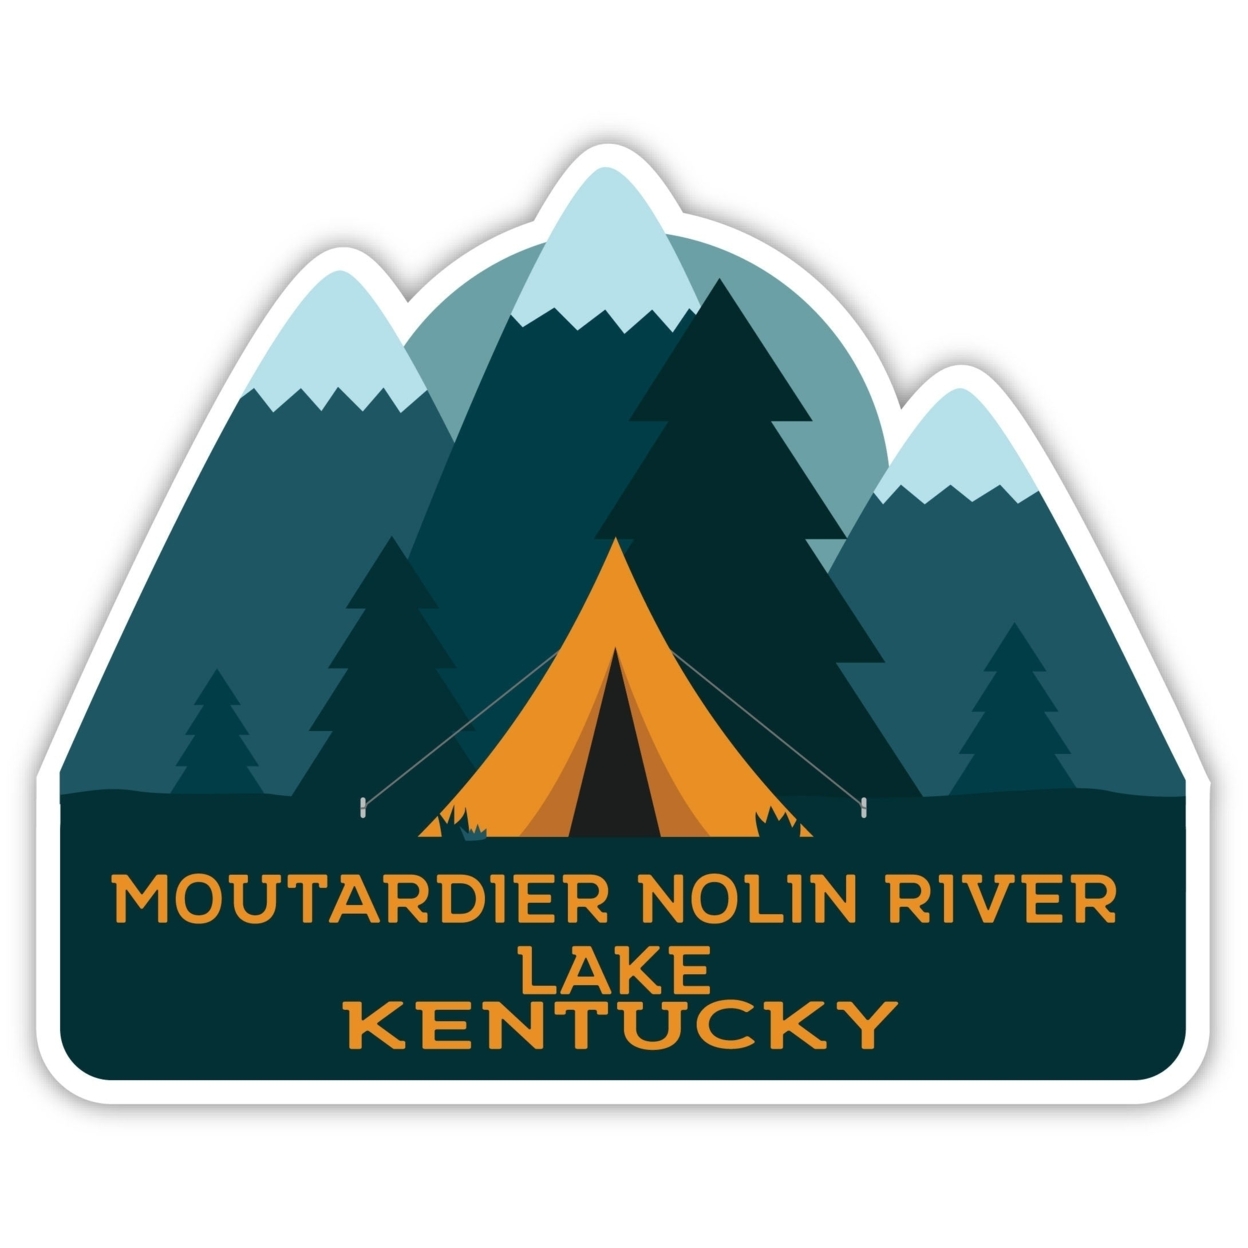 Moutardier Nolin River Lake Kentucky Souvenir Decorative Stickers (Choose Theme And Size) - Single Unit, 4-Inch, Tent